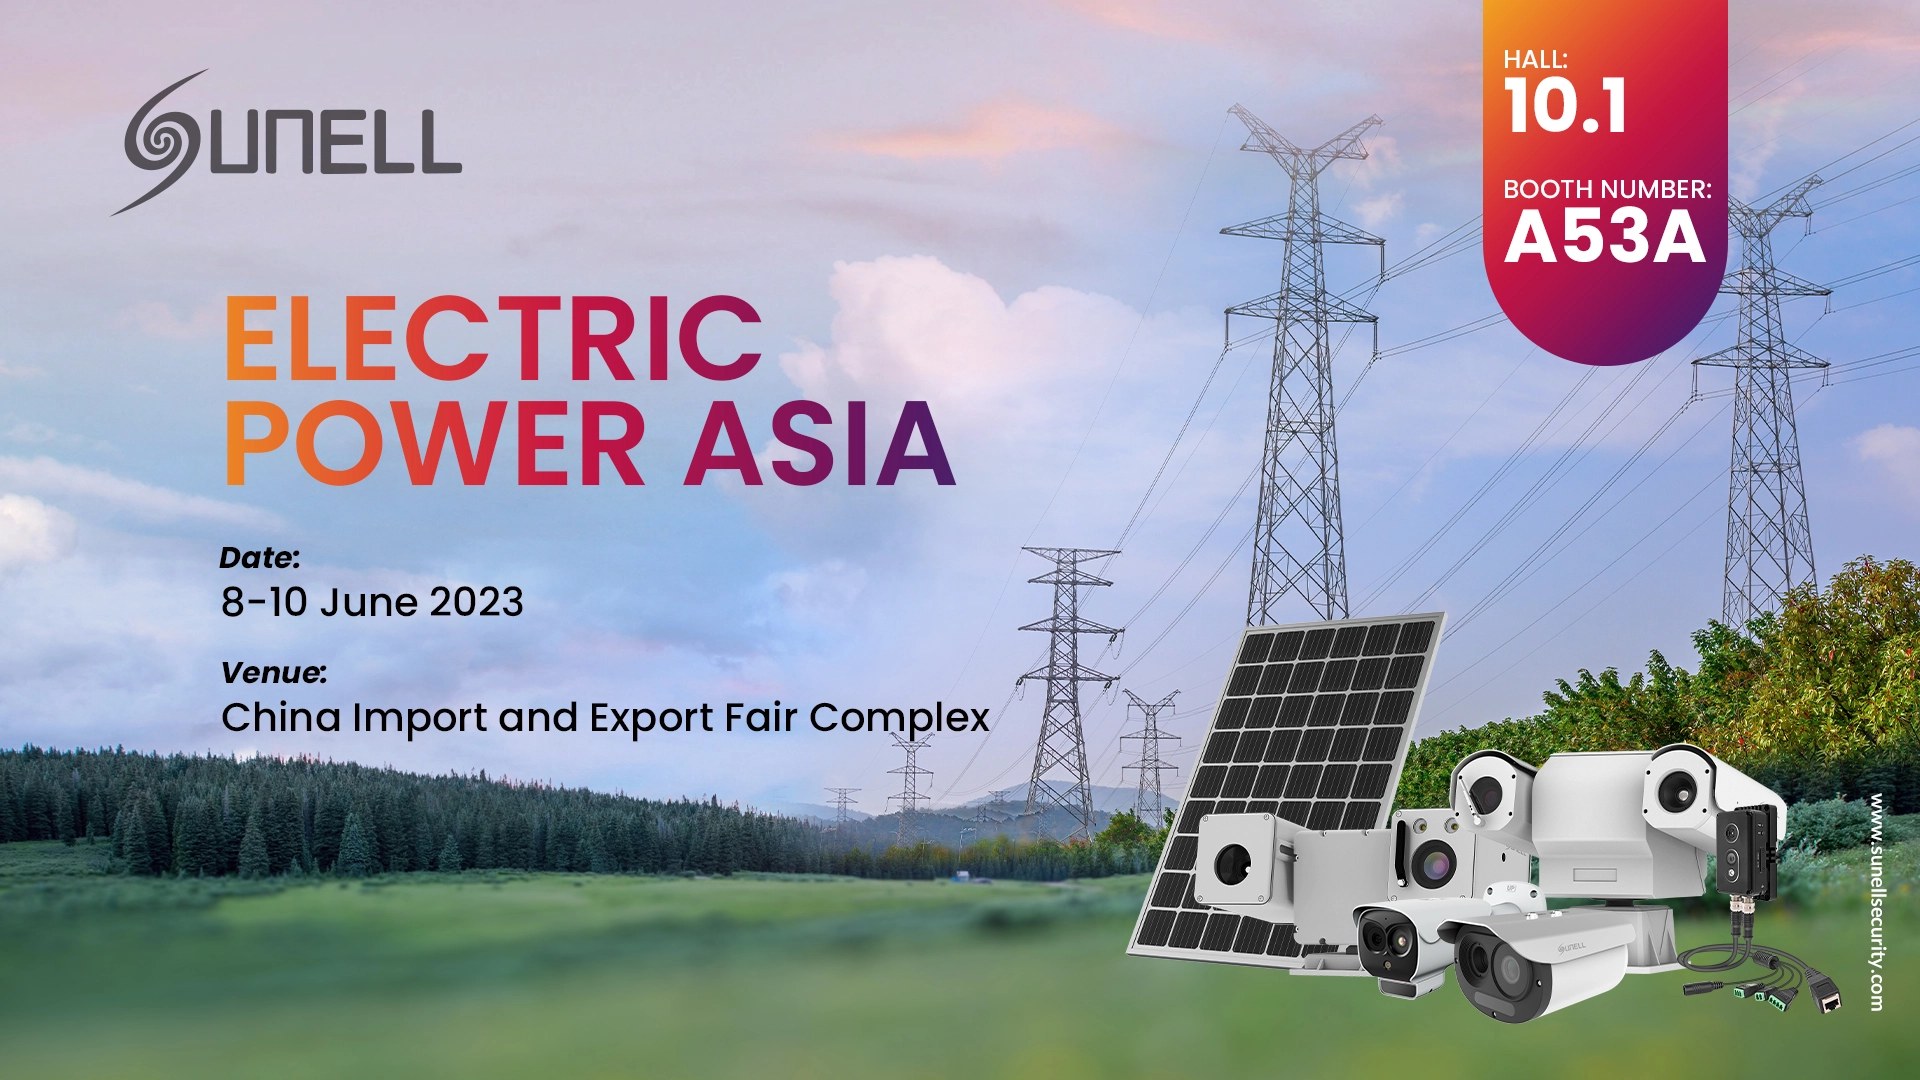 Sunell은 Electric Power ASIA에서 열 이미징 지능형 솔루션을 선보일 예정입니다.